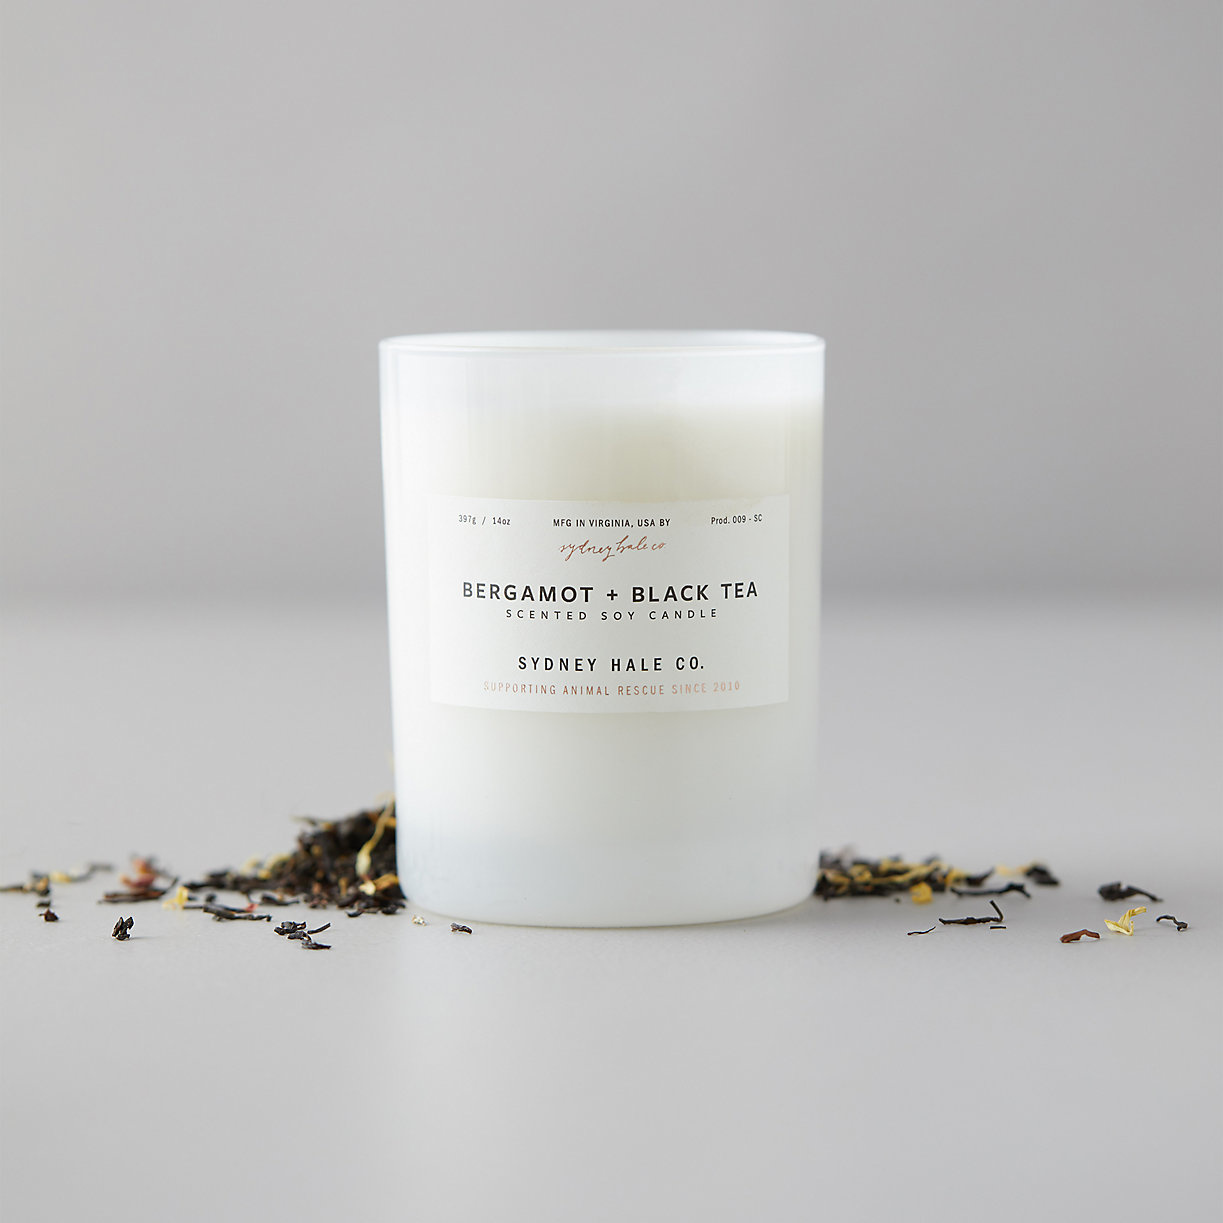 Sydney Hale Co Bergamot & Black Tea Candle